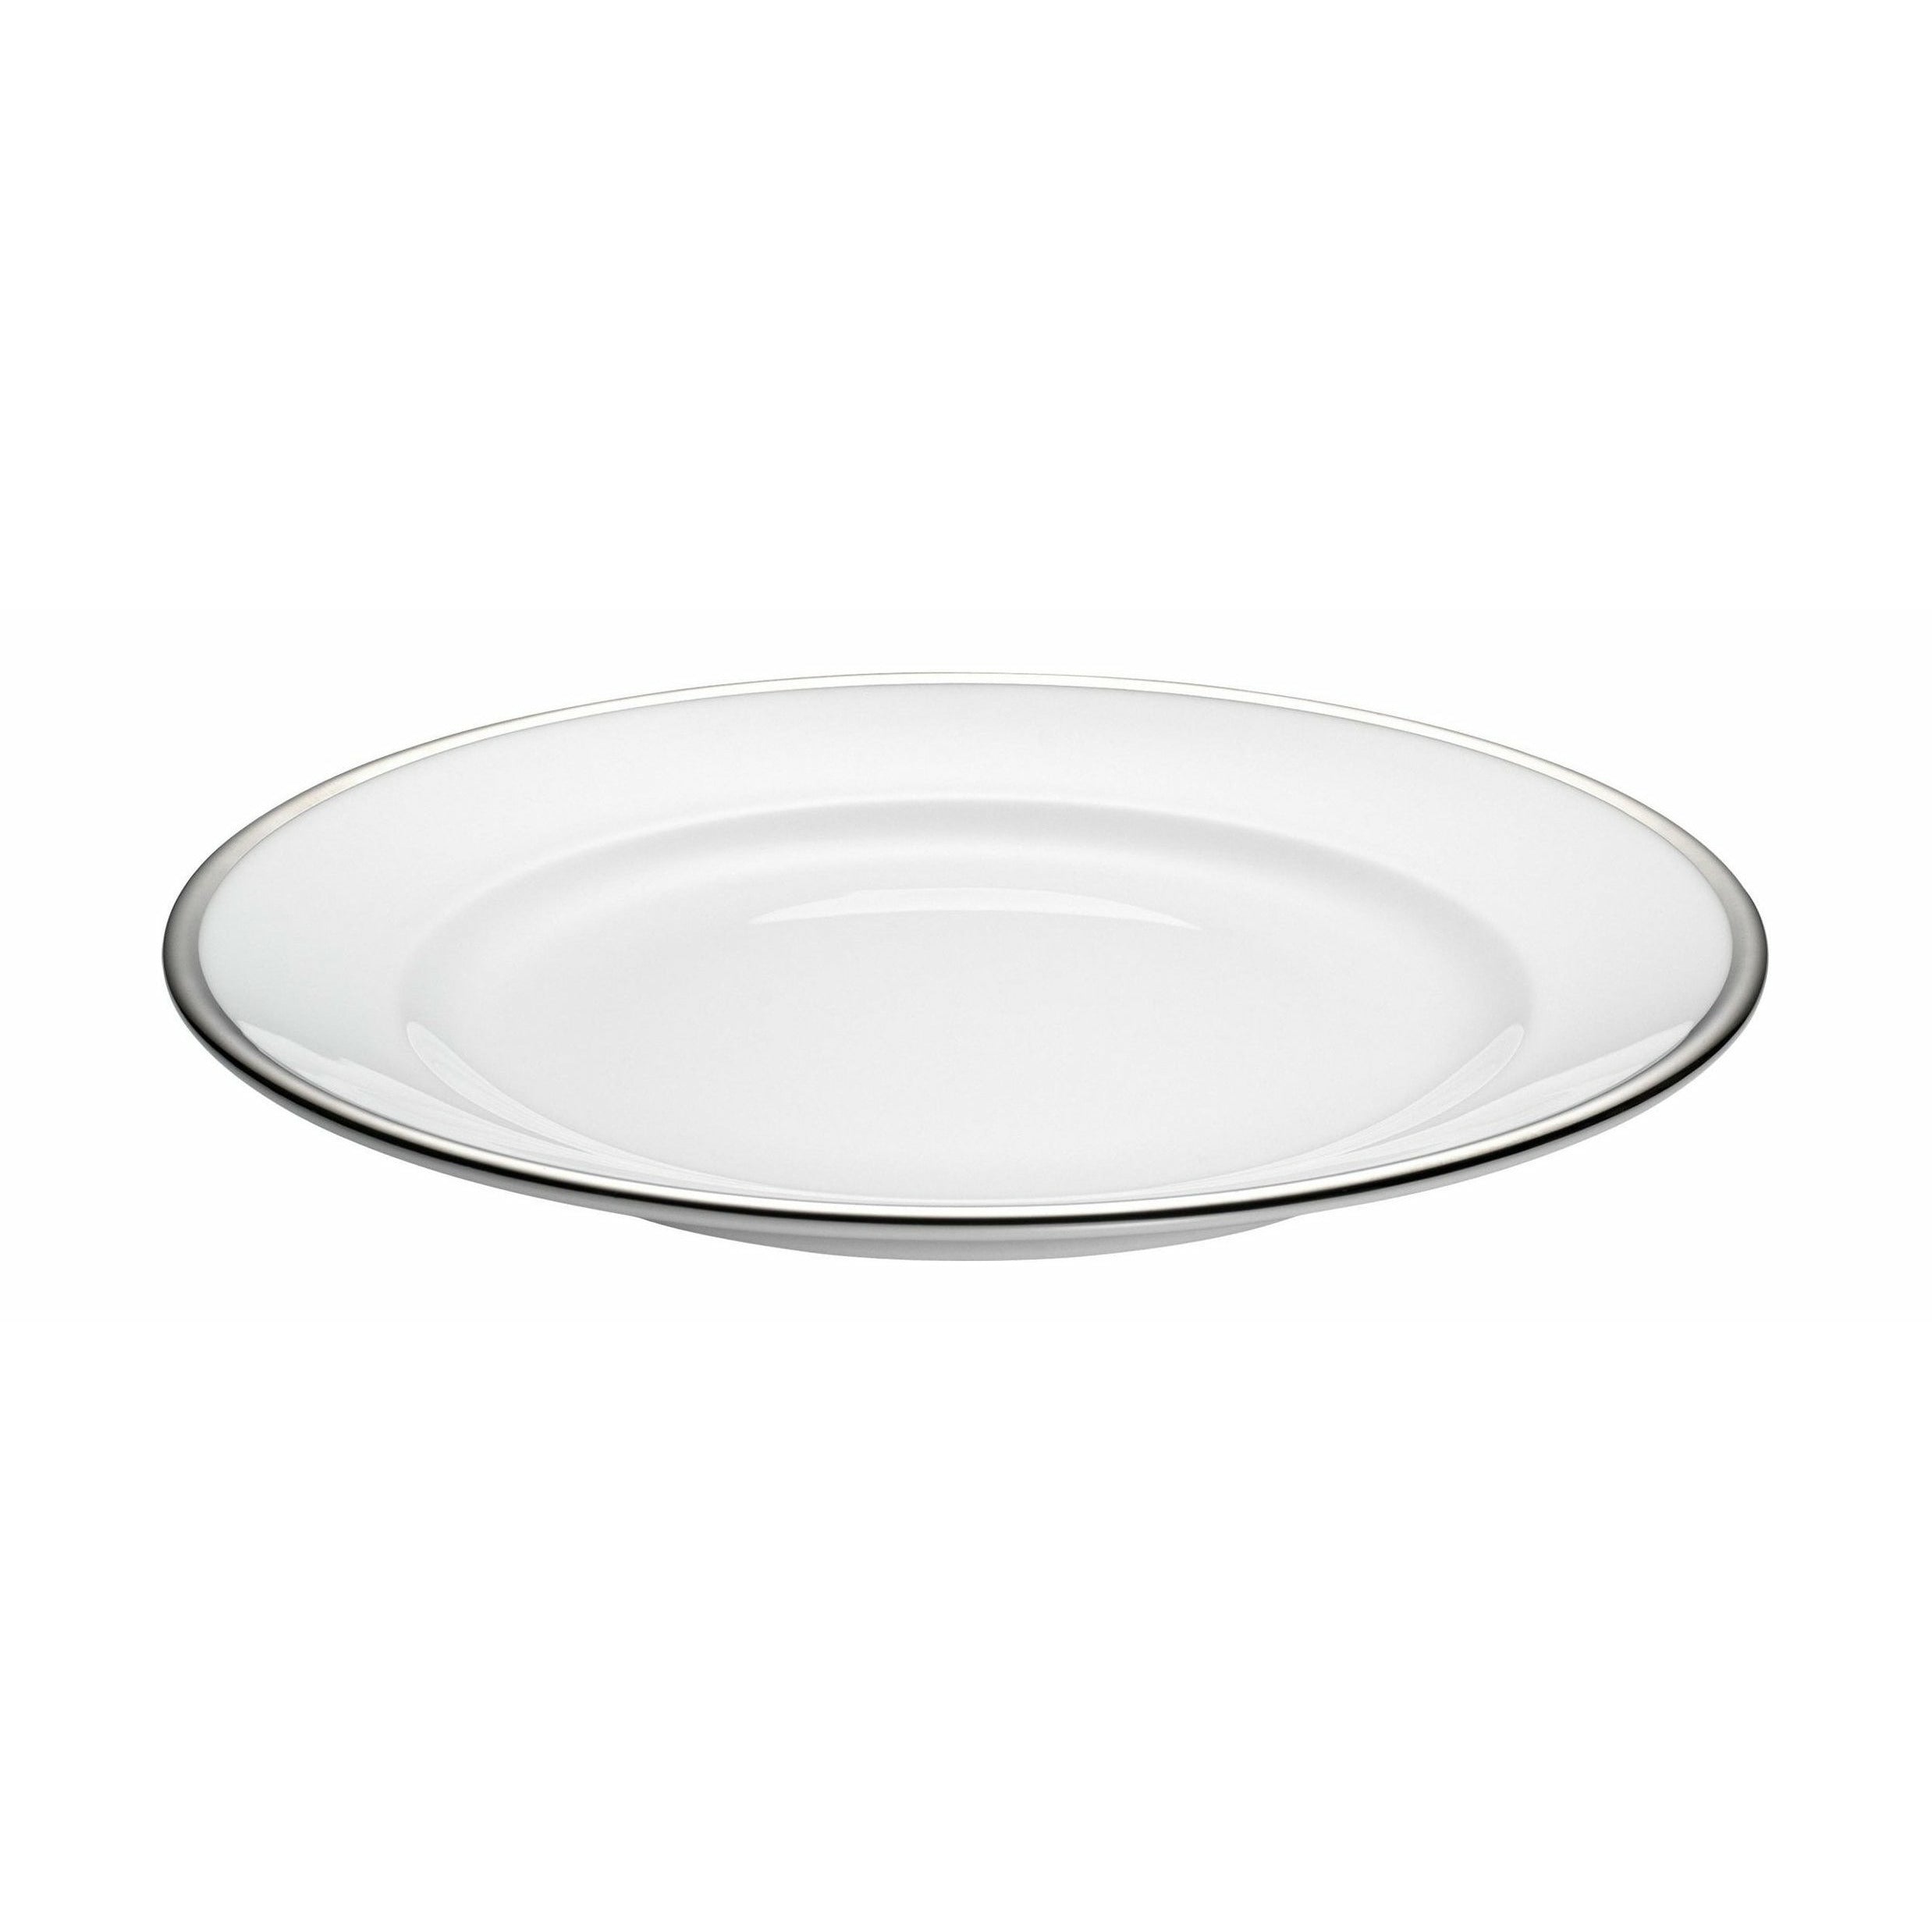 Pillivuyt Bistro Plate Ø 21 cm, blanco/plata